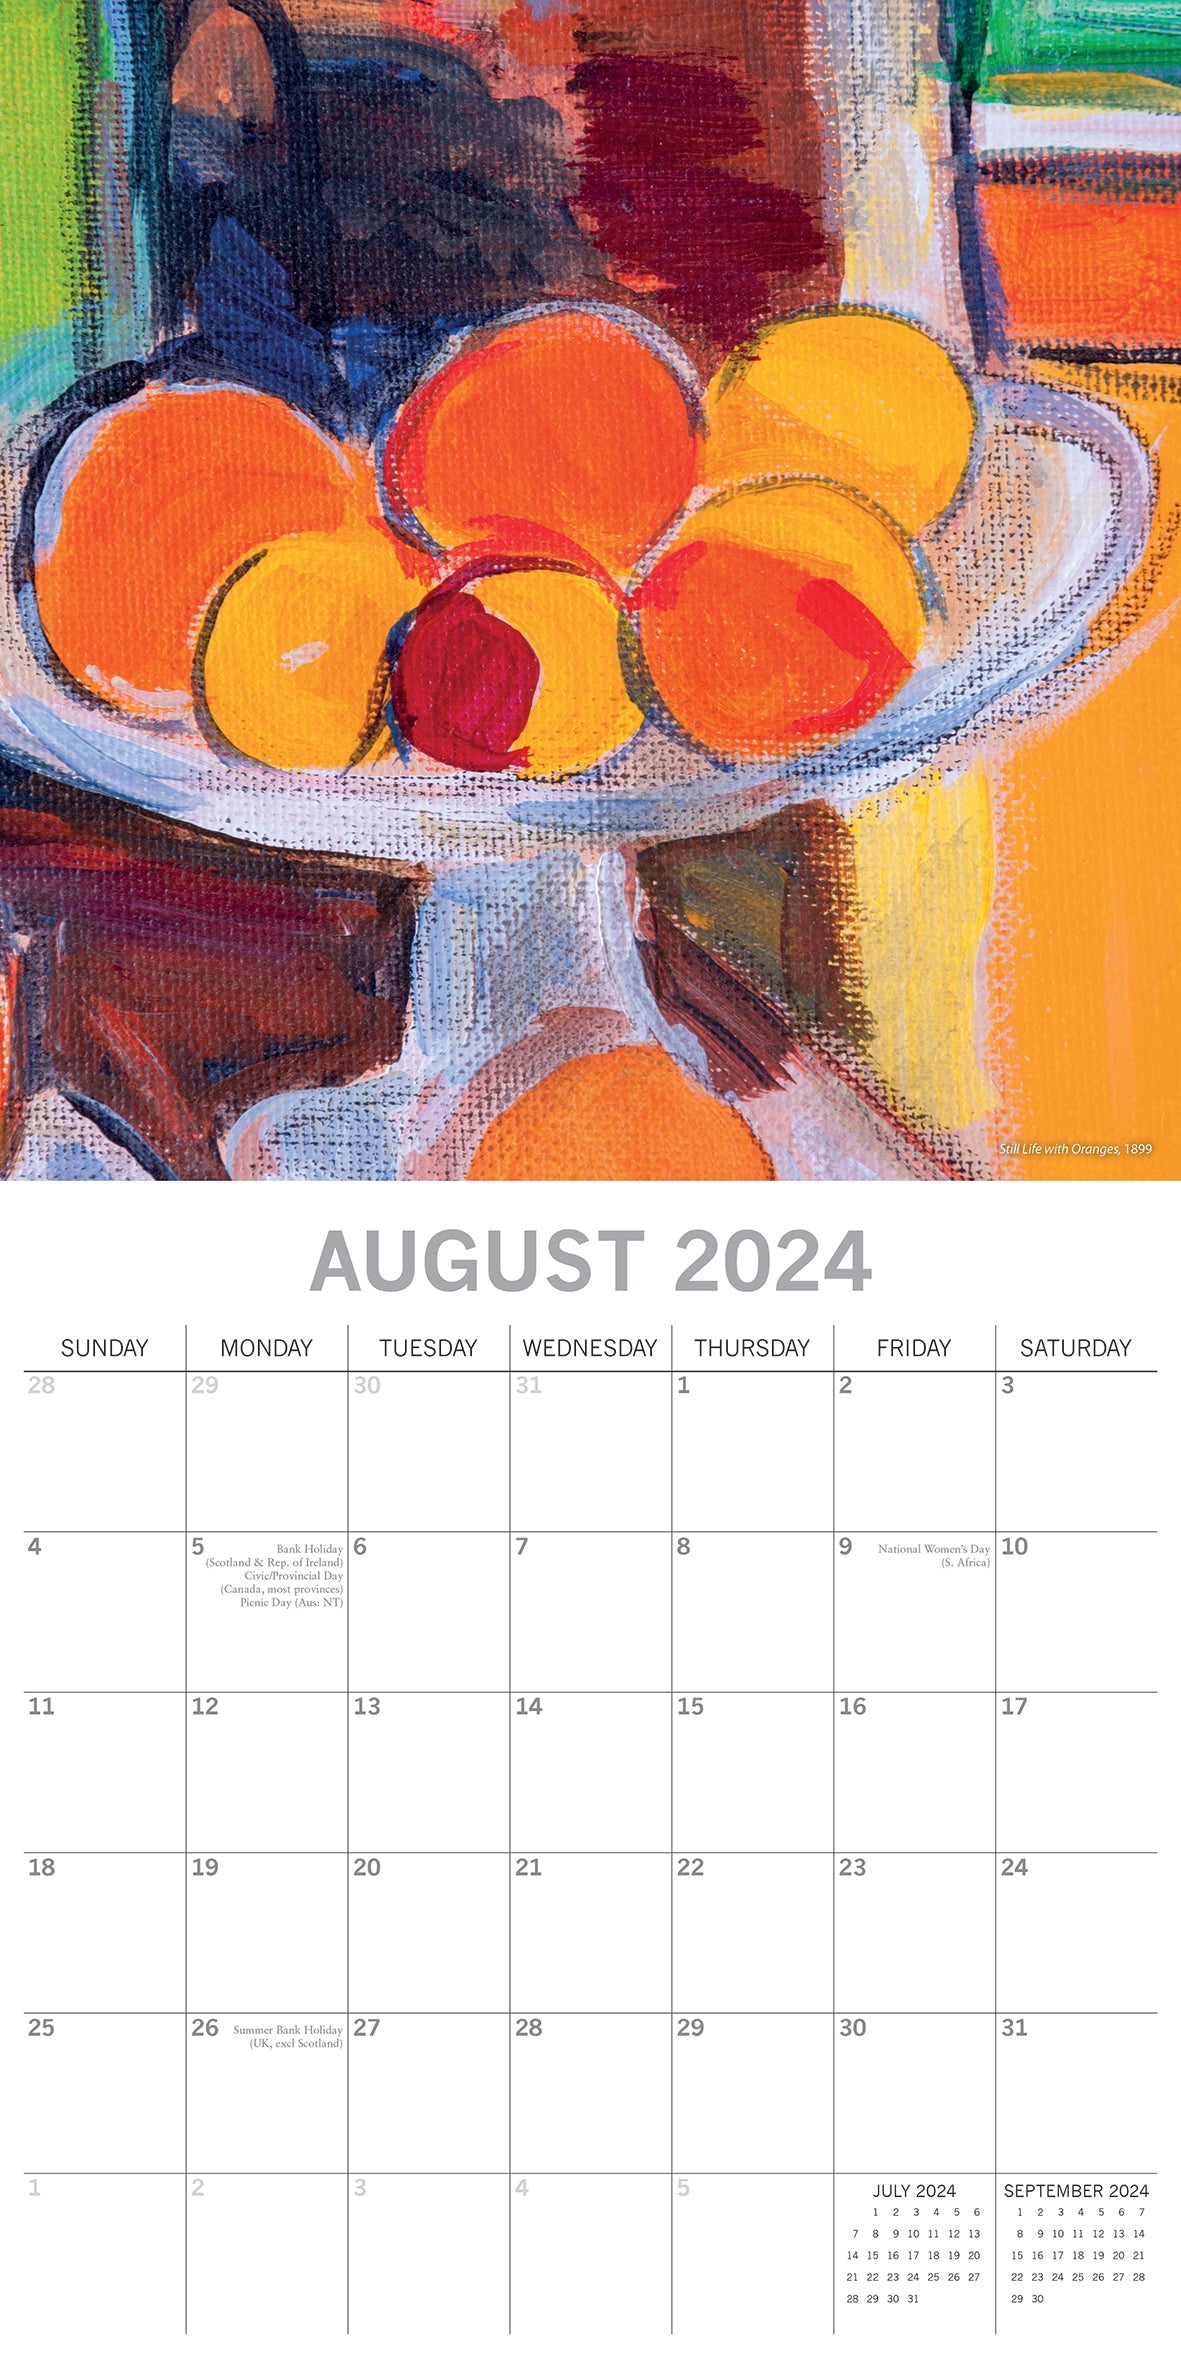 2024 Matisse - Square Wall Calendar